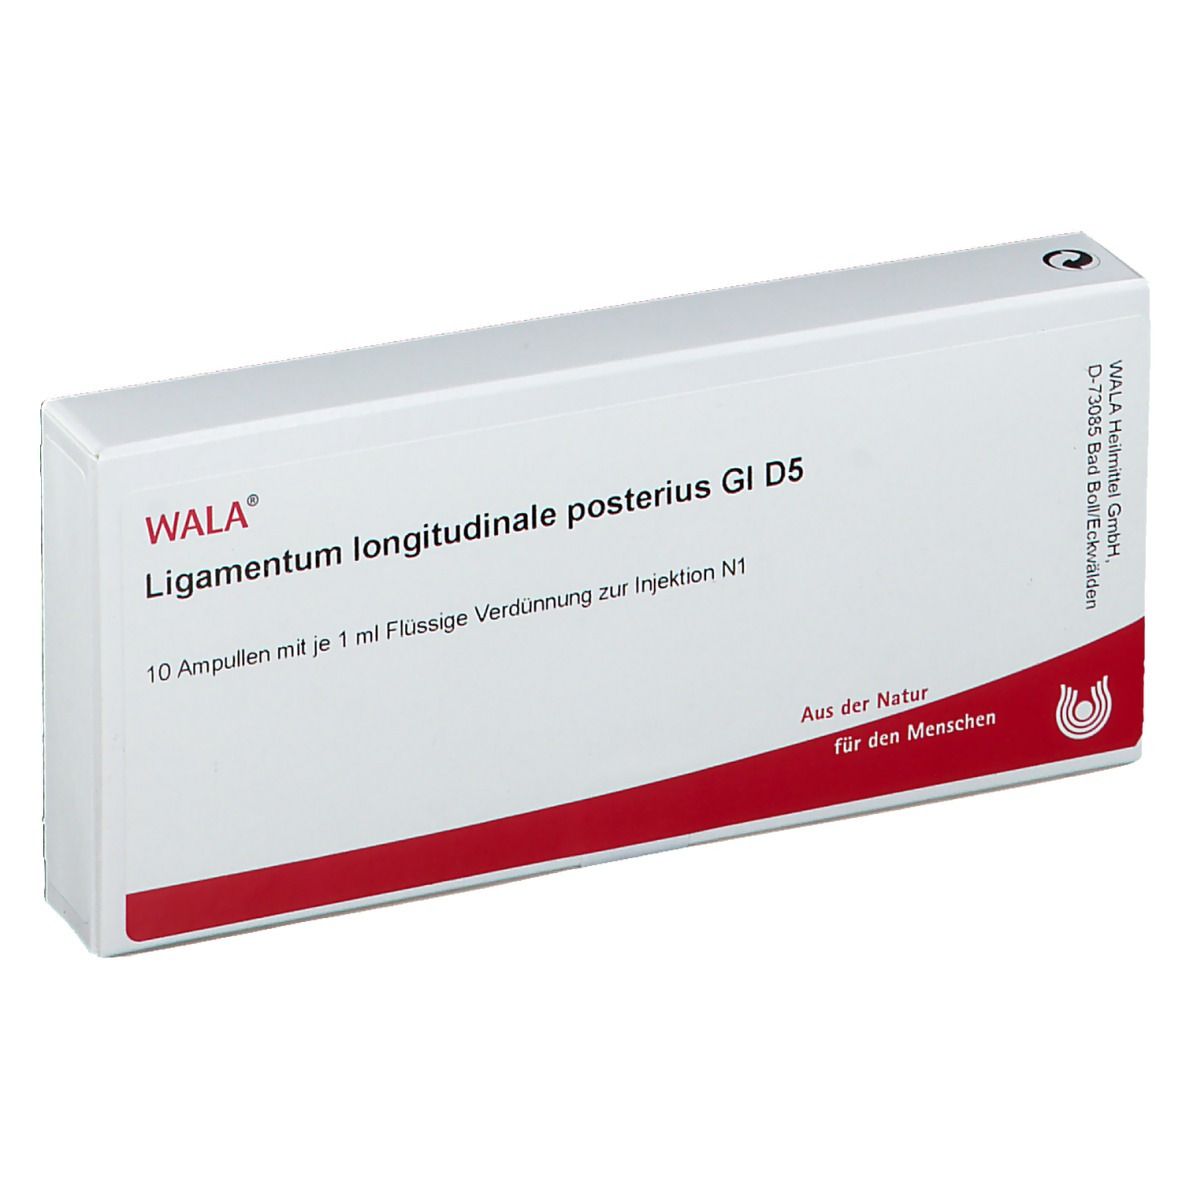 WALA® Ligamentum longitudinale posterius Gl D 5